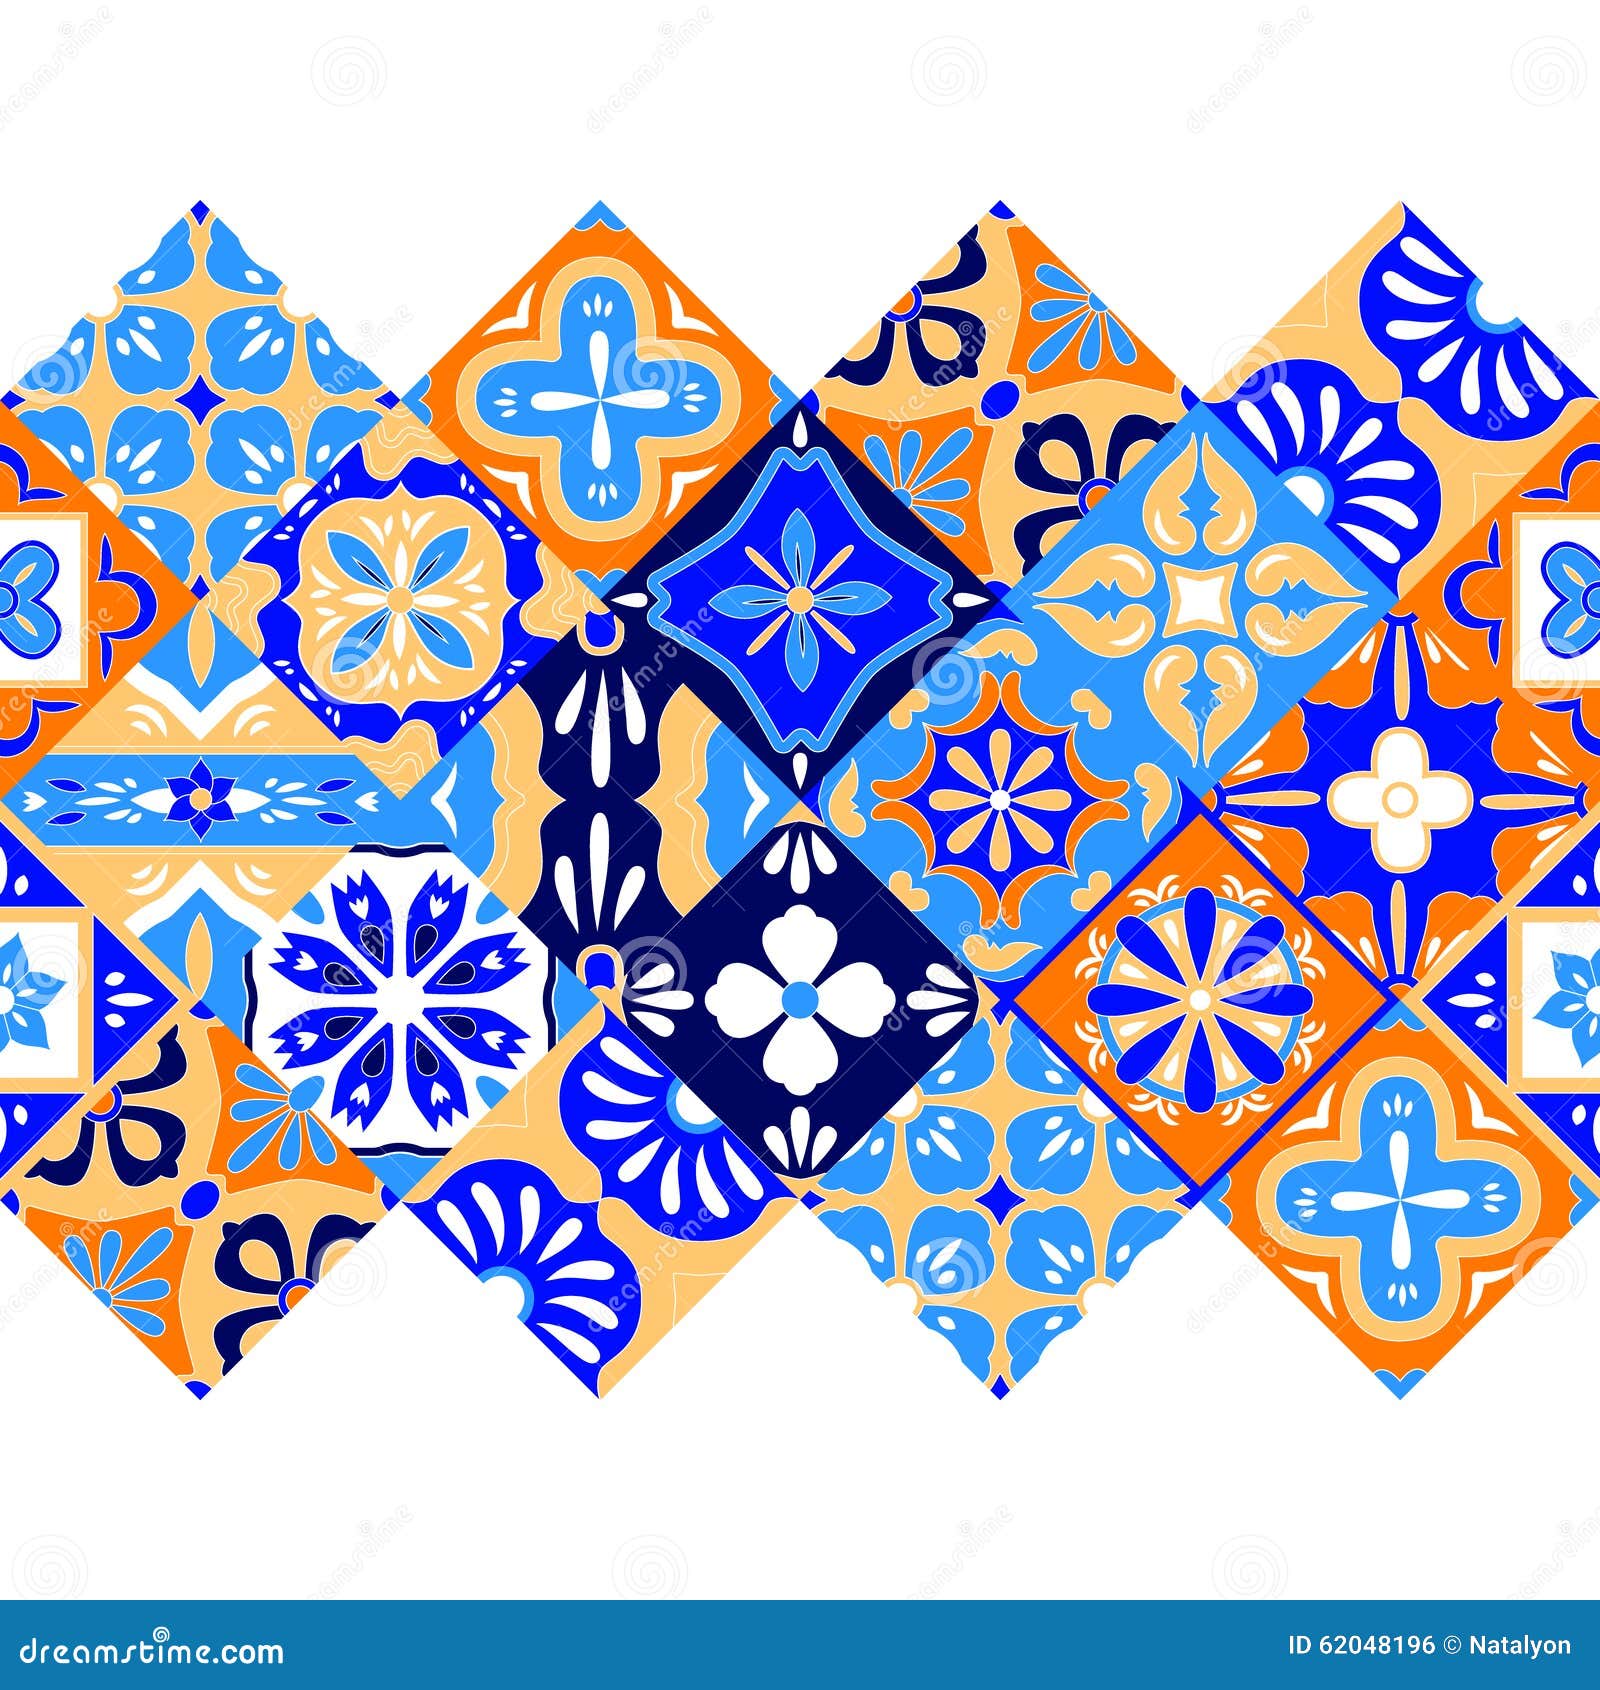 mexican stylized talavera tiles seamless border in blue orange and white, 